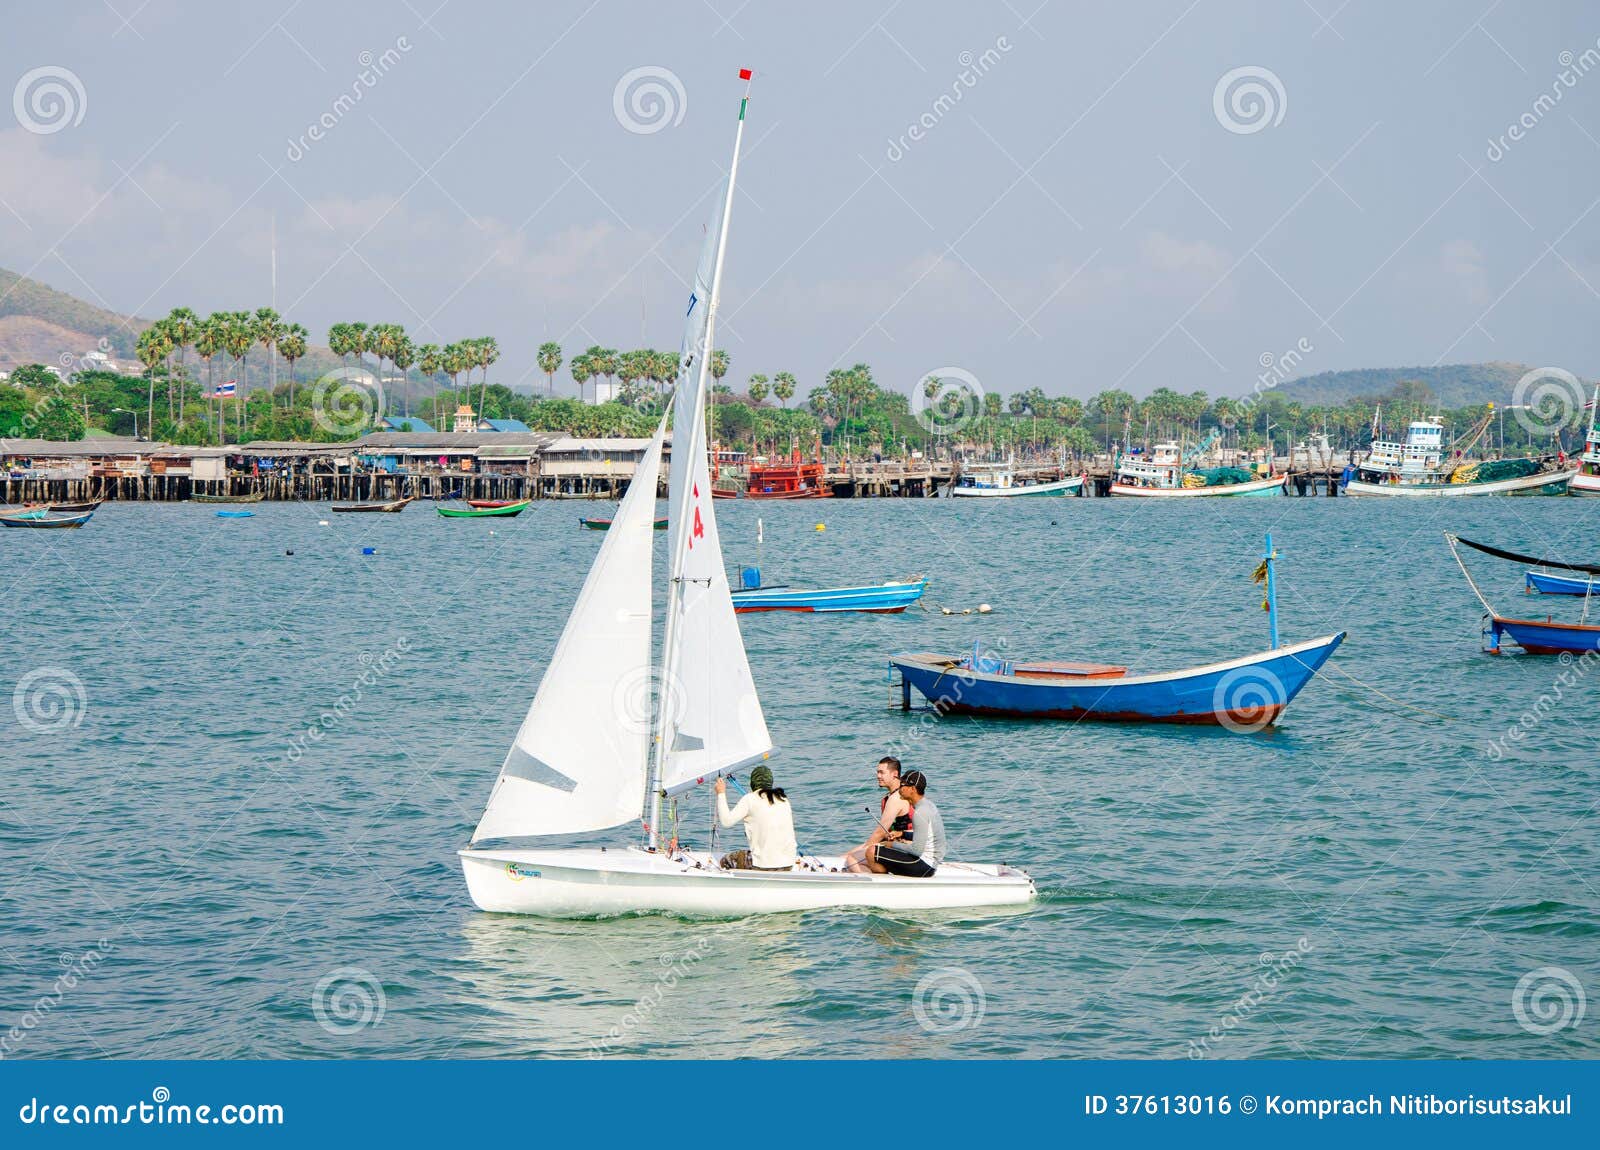 sailboat in thailand